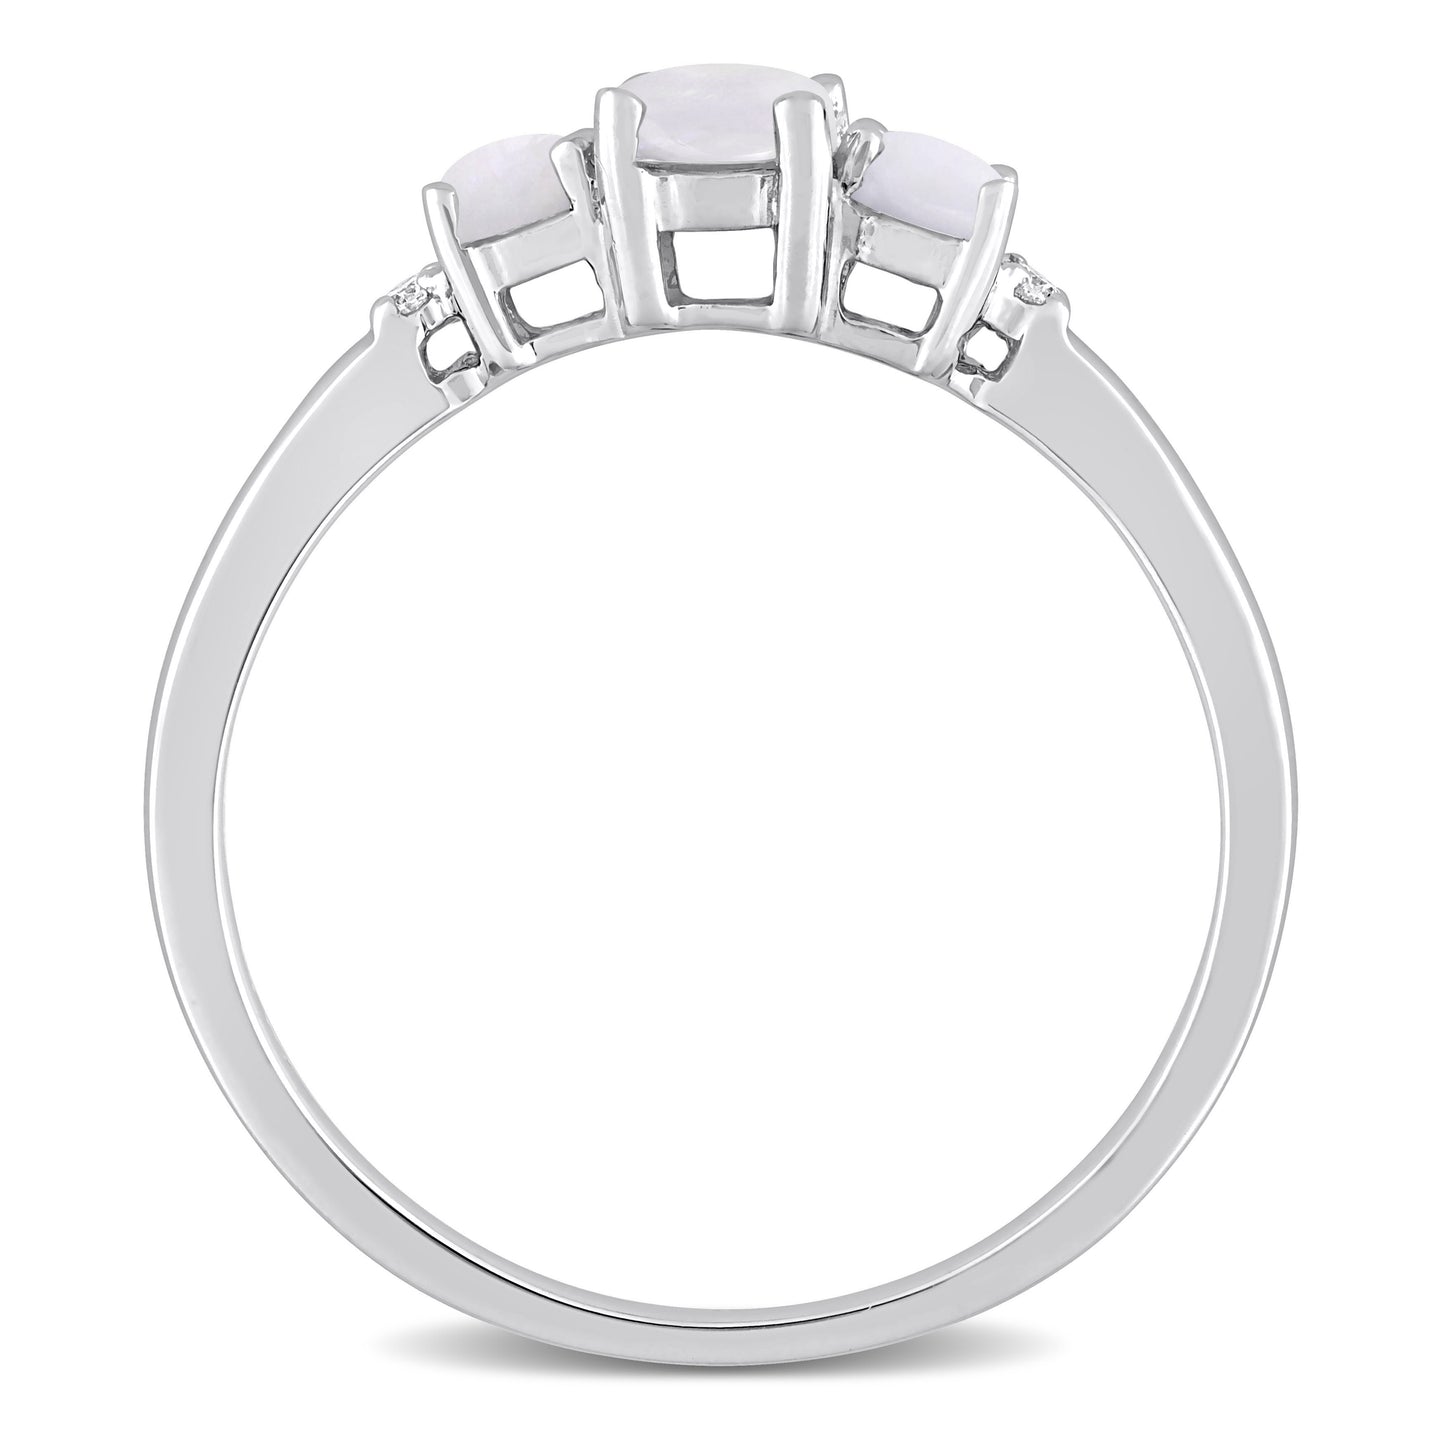 3-Stone Opal & Diamond Oval Ring in 10k White Gold